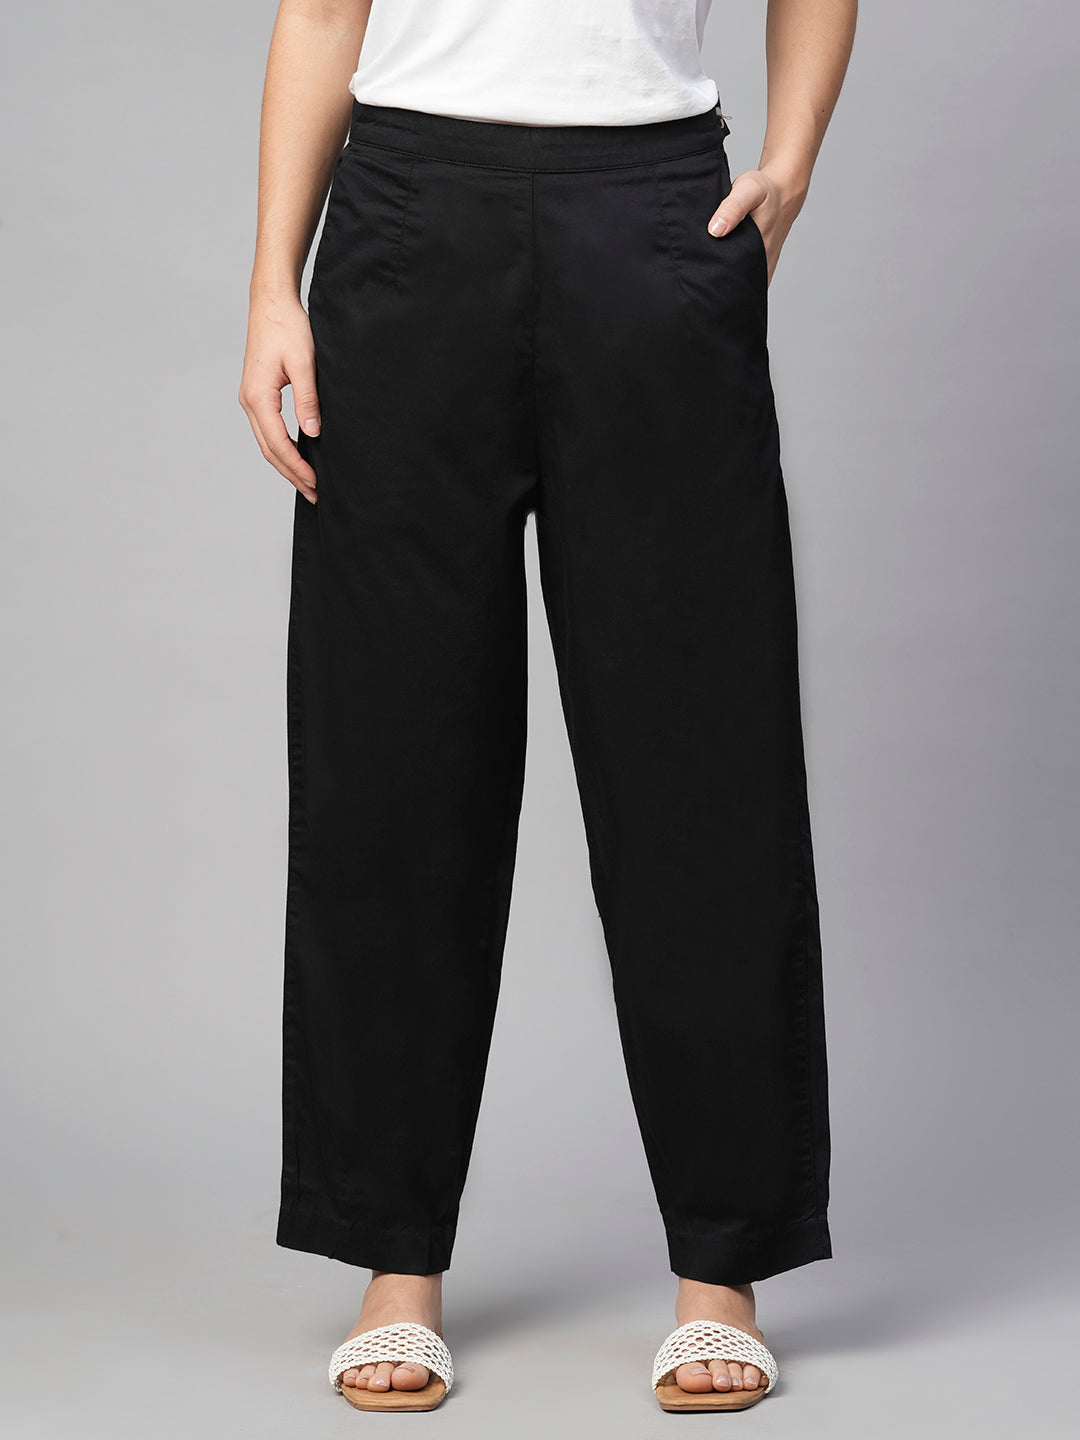 Women's Black Cotton Elastane Regular Fit Pant